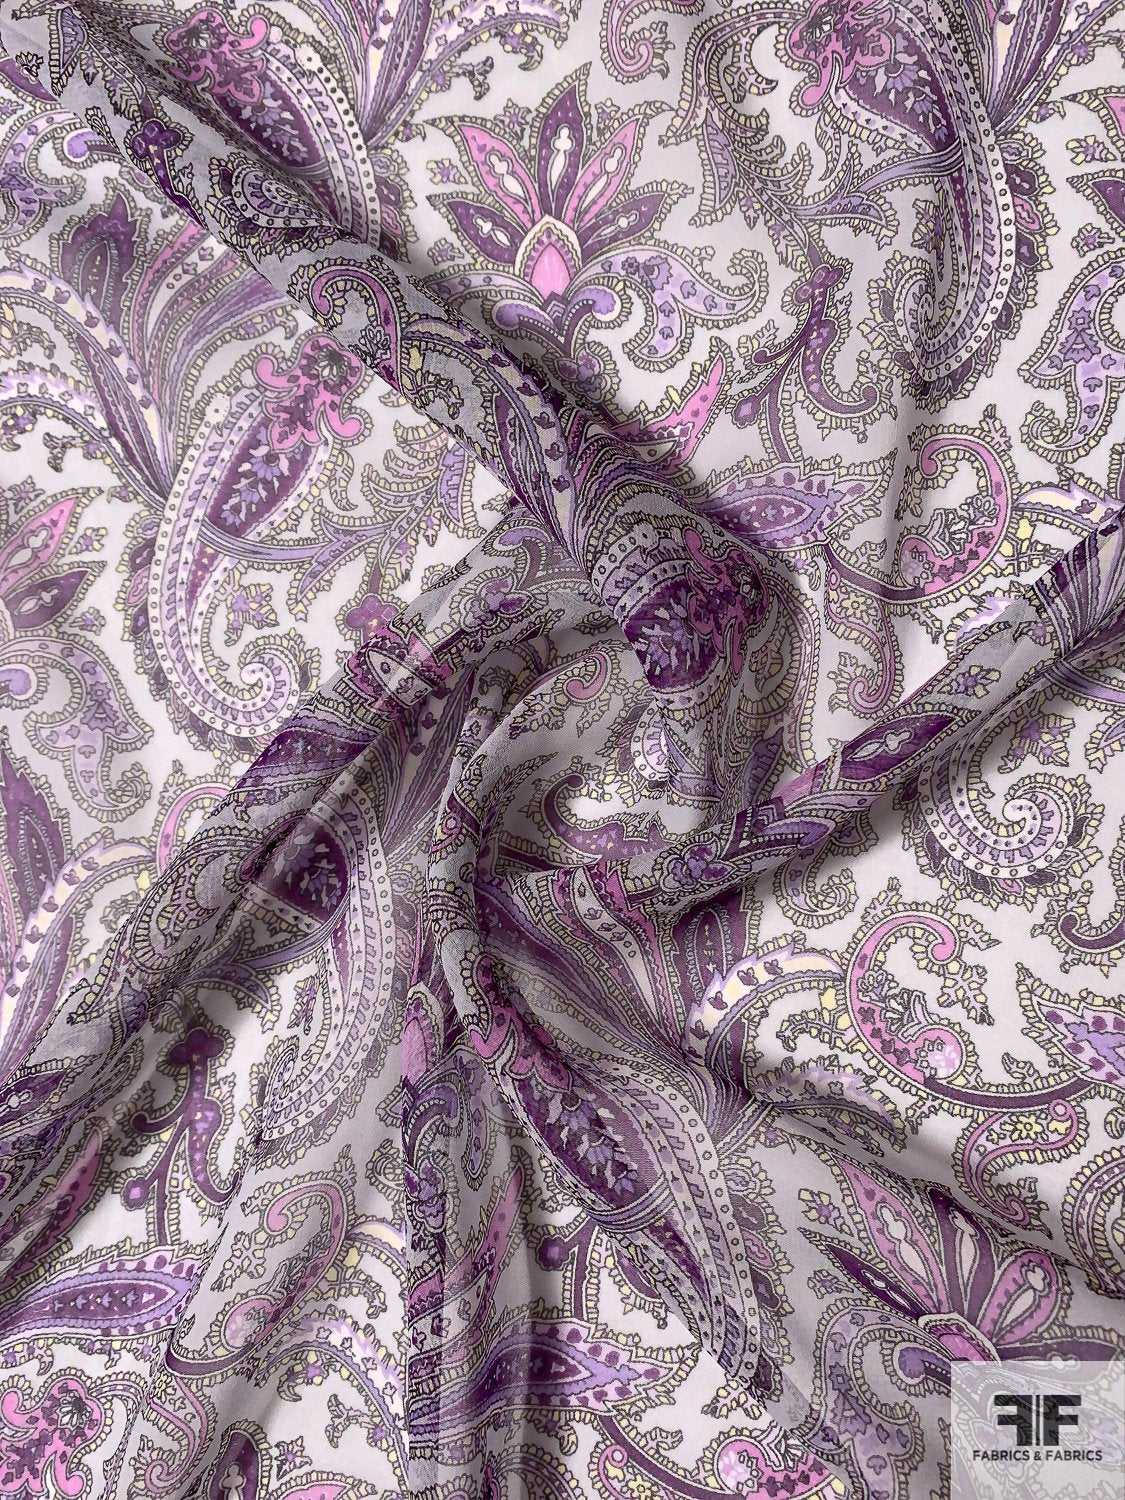 Black, Grays, White, Silk Chiffon - So Elegant! Abstract Floral Paisley  Pattern - Beautiful Textiles